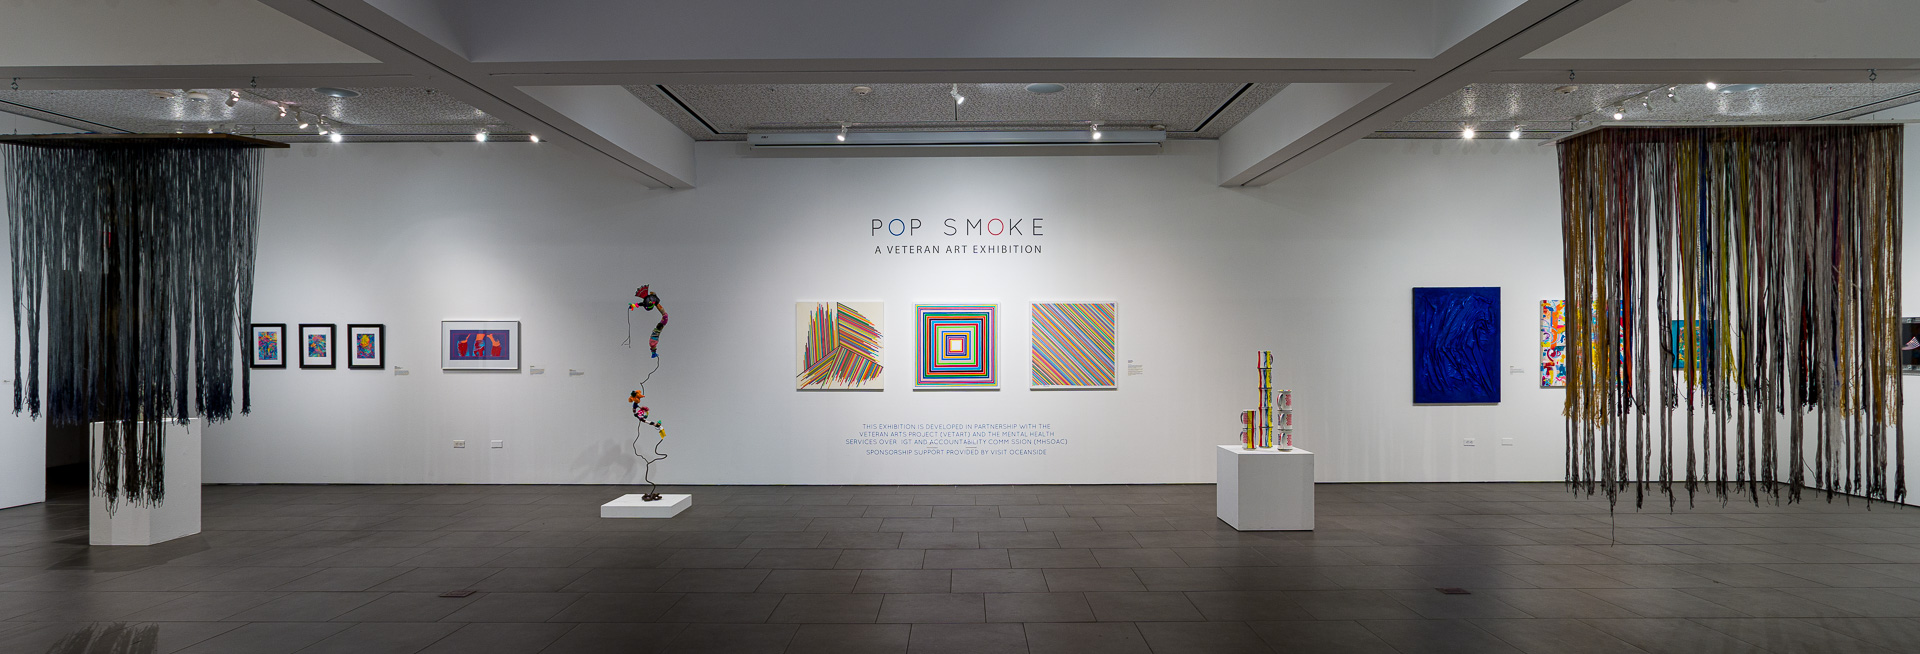 Pop Smoke installed in Oceanside Museum of Art